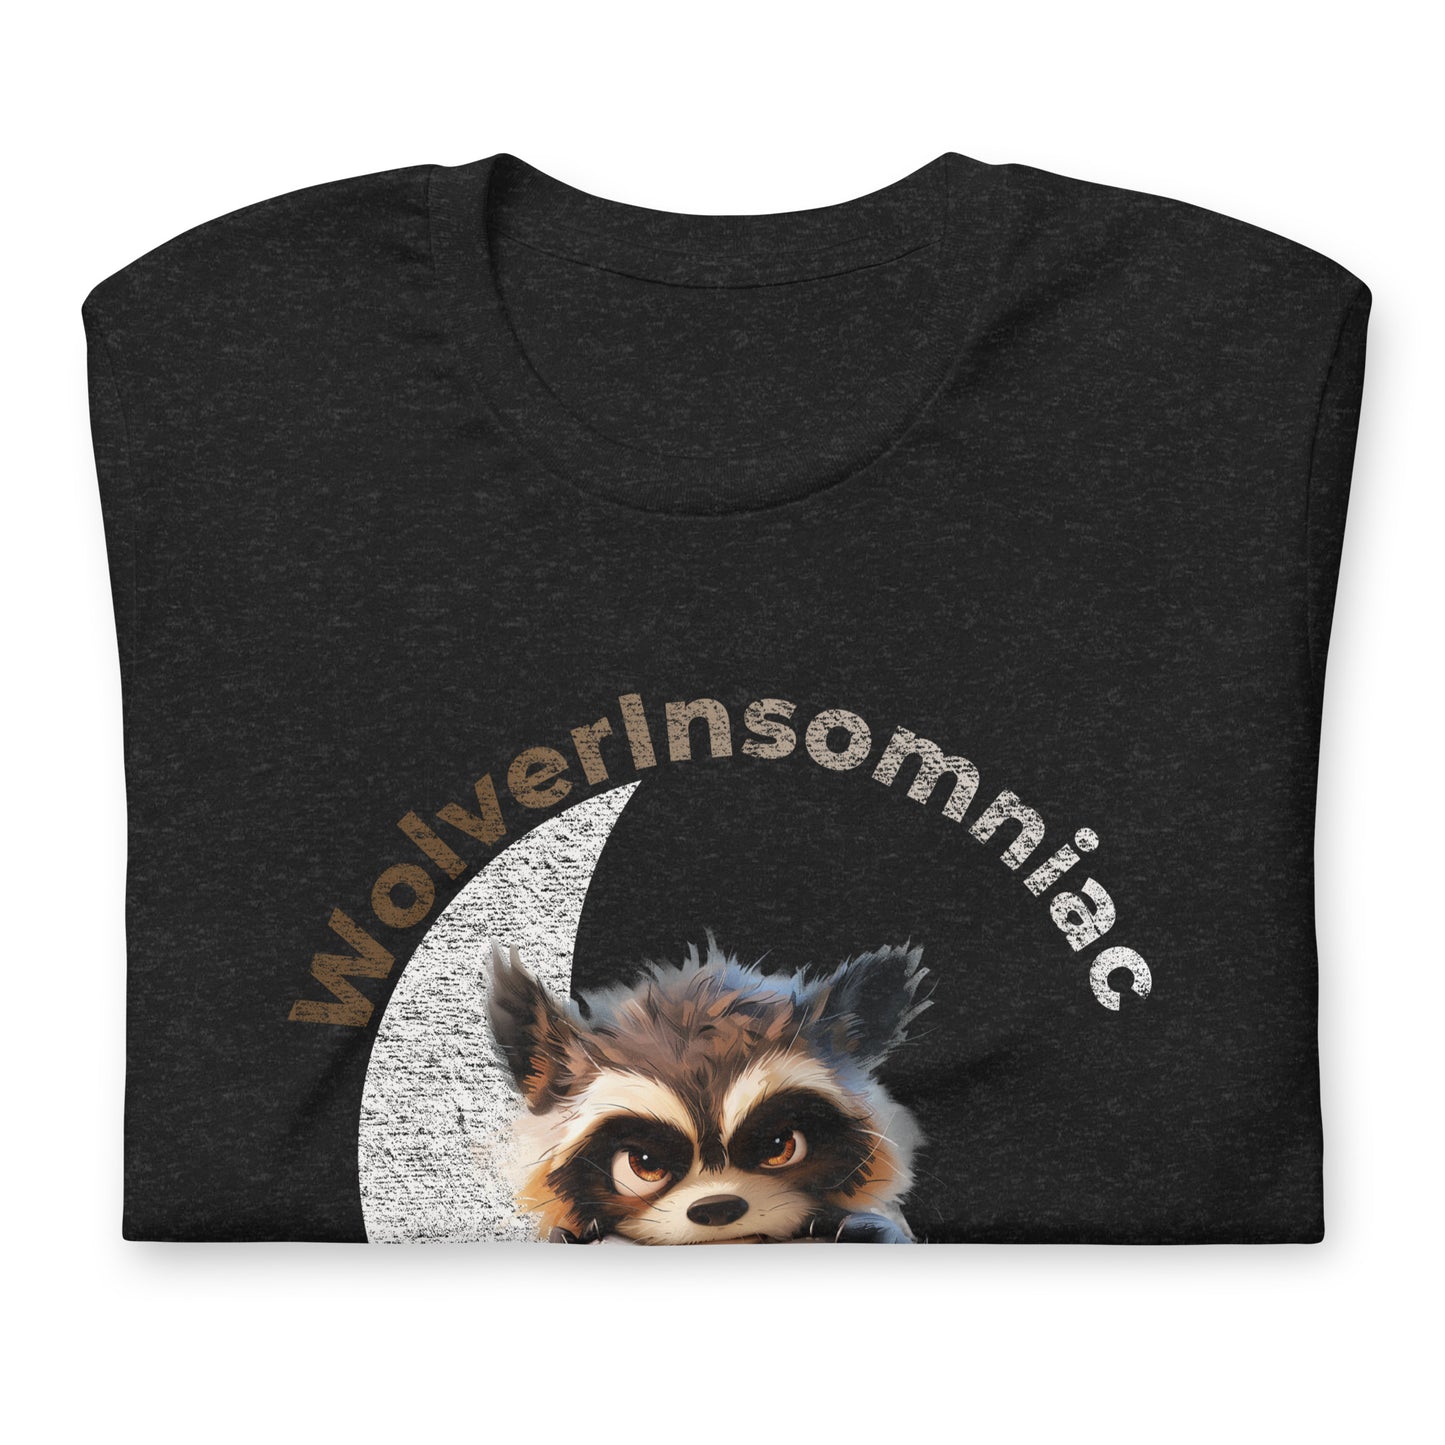 WolverInsomniac, Insomniac Wolverine, Insomnia, Animals, Sleep Disorders, Graphic Tee Shirt, Black